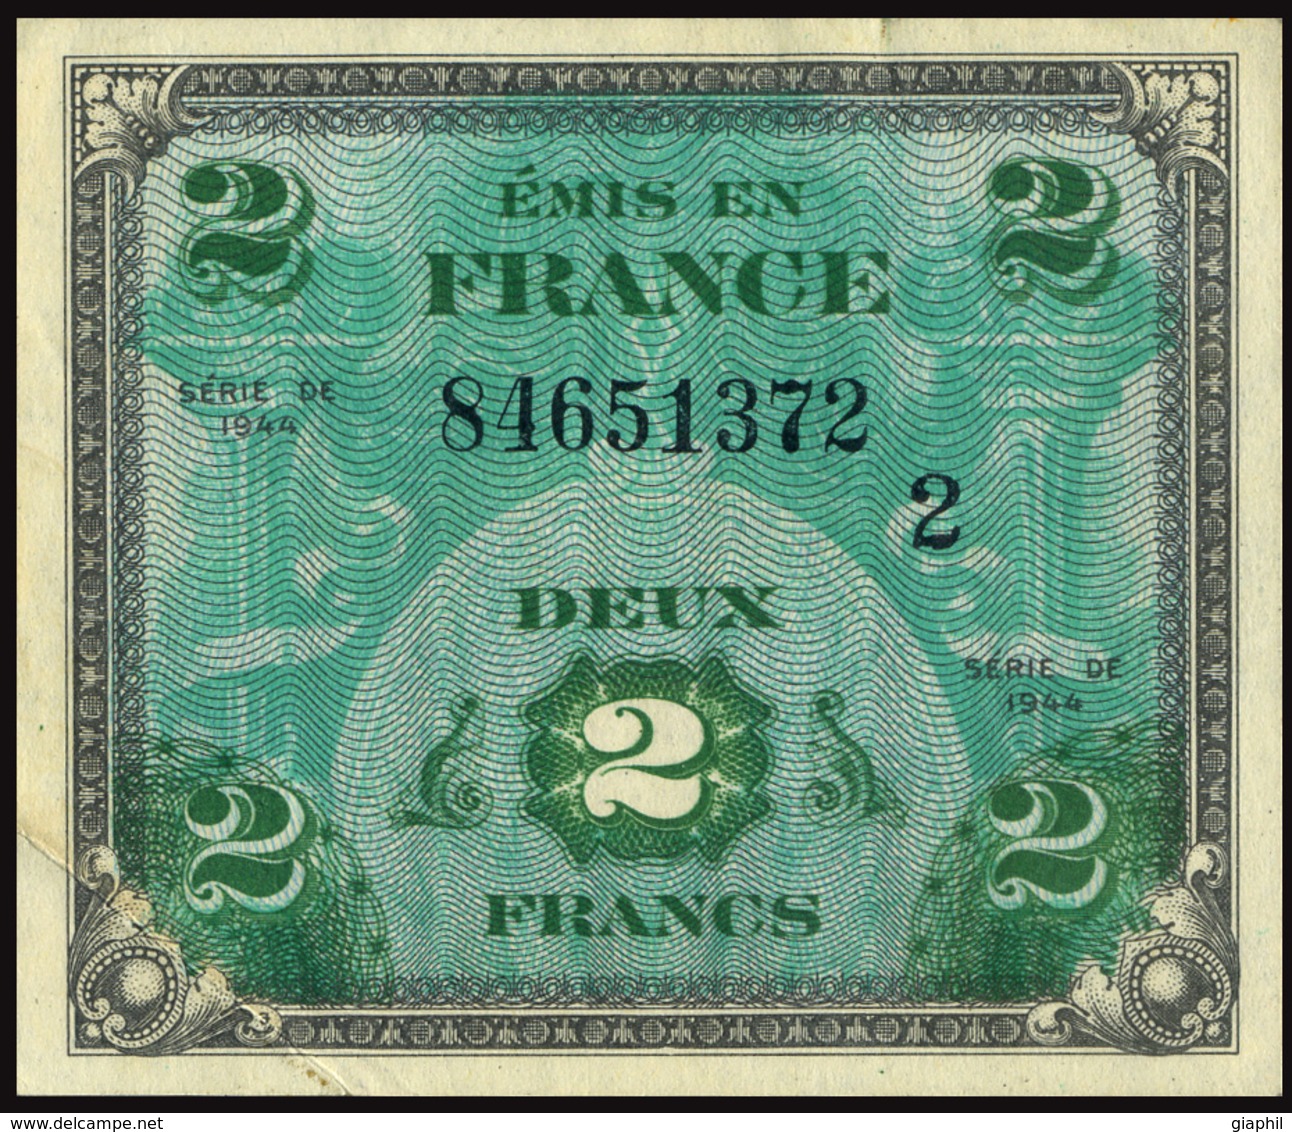 FRANCE 1944 DRAPEAU/FRANCE - 2 FRANCS OFFER!!! - 1944 Bandiera/Francia